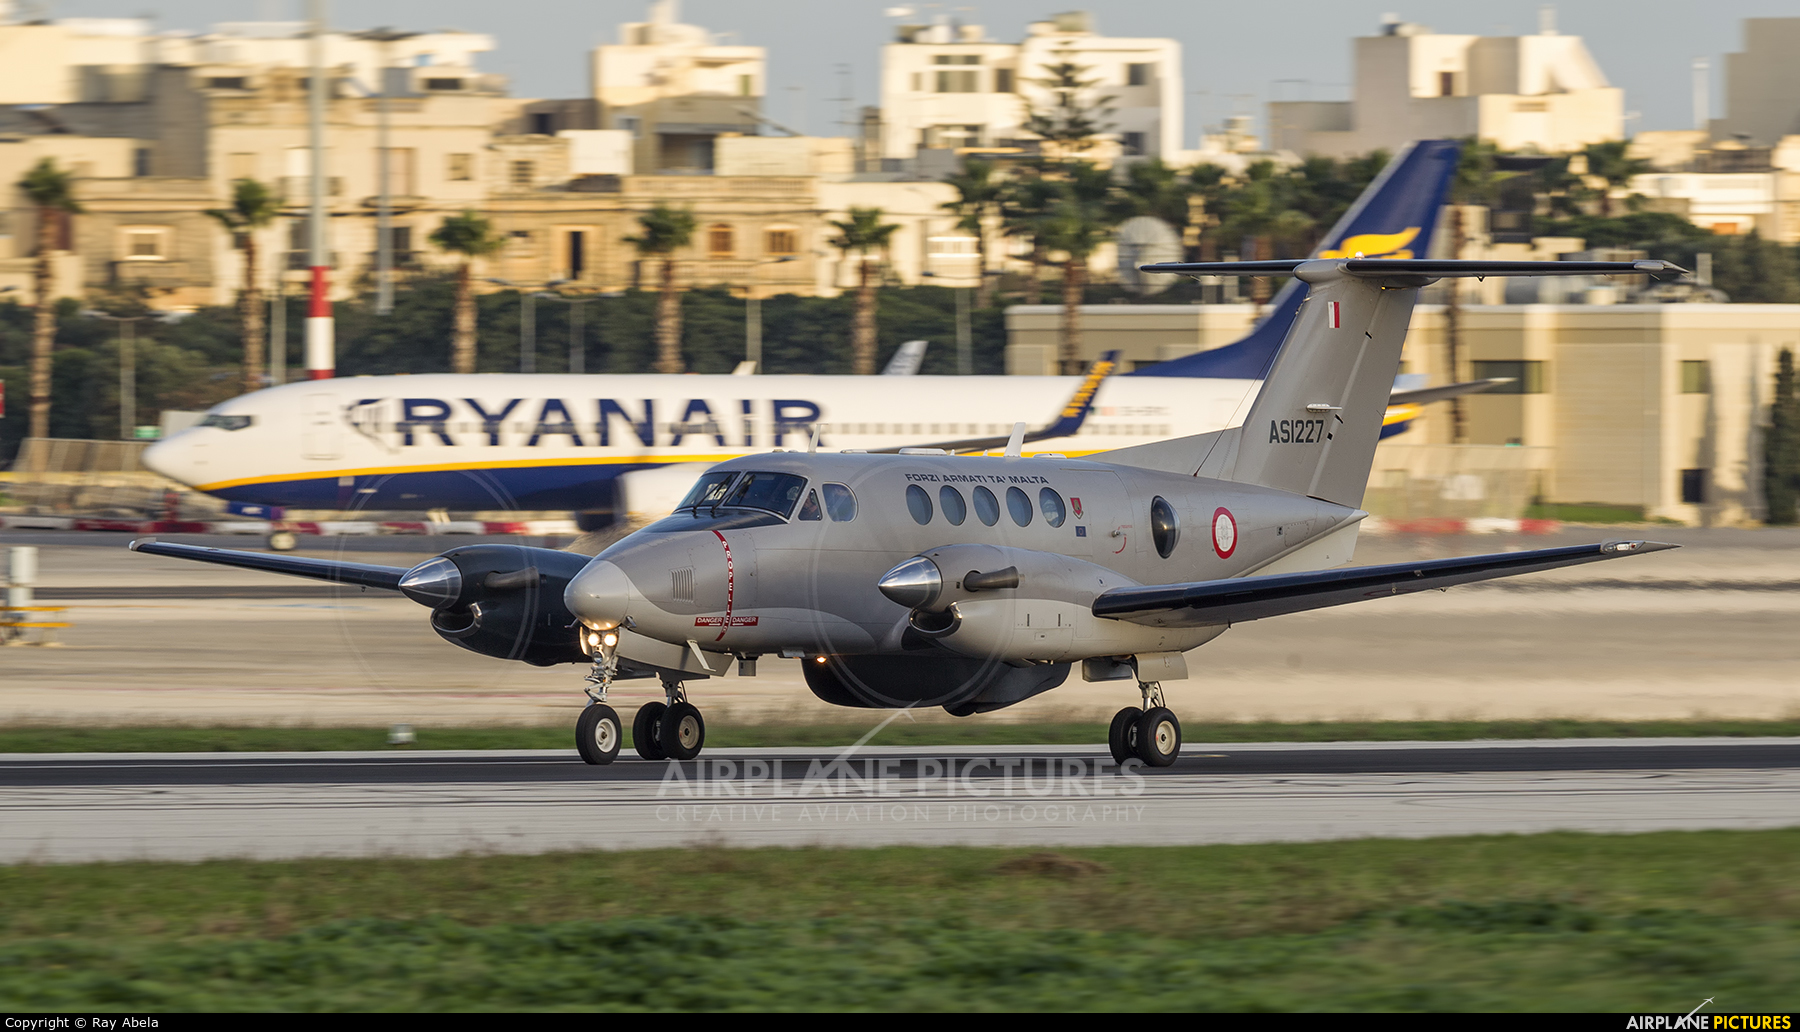 Malta - Armed Forces AS1227 aircraft at Malta Intl